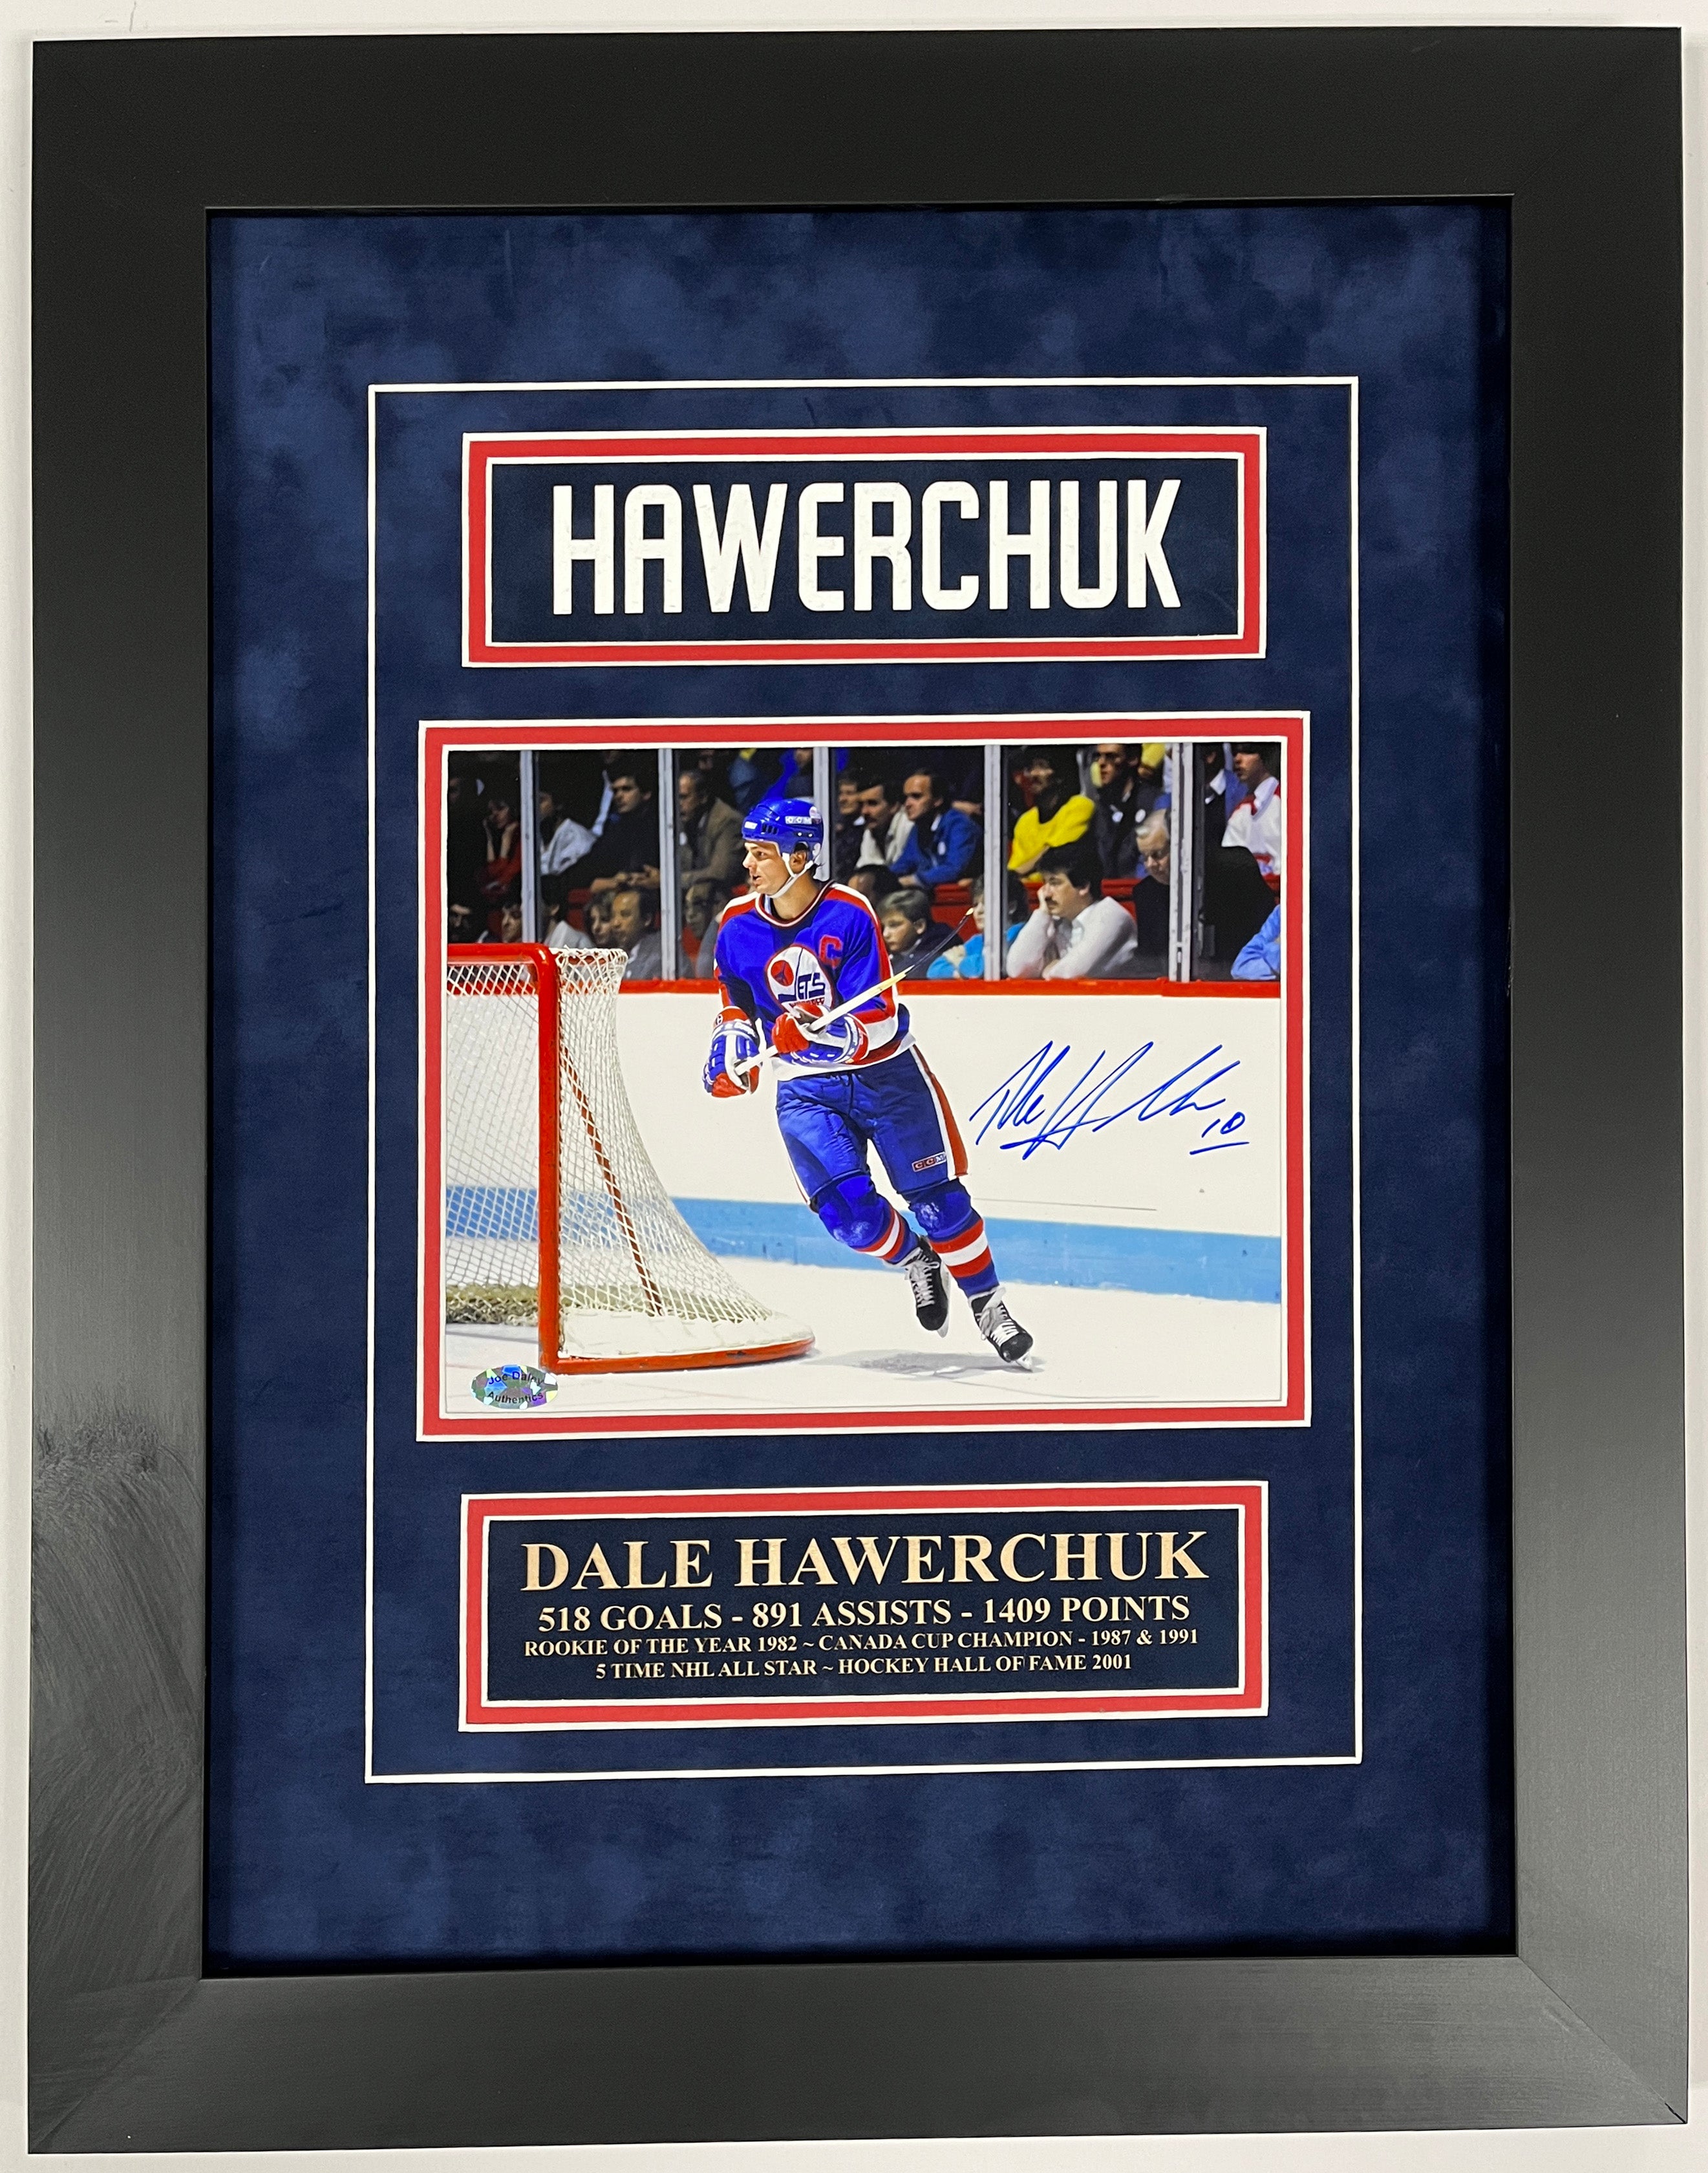 Hawerchuk memorabilia up for auction – Winnipeg Free Press